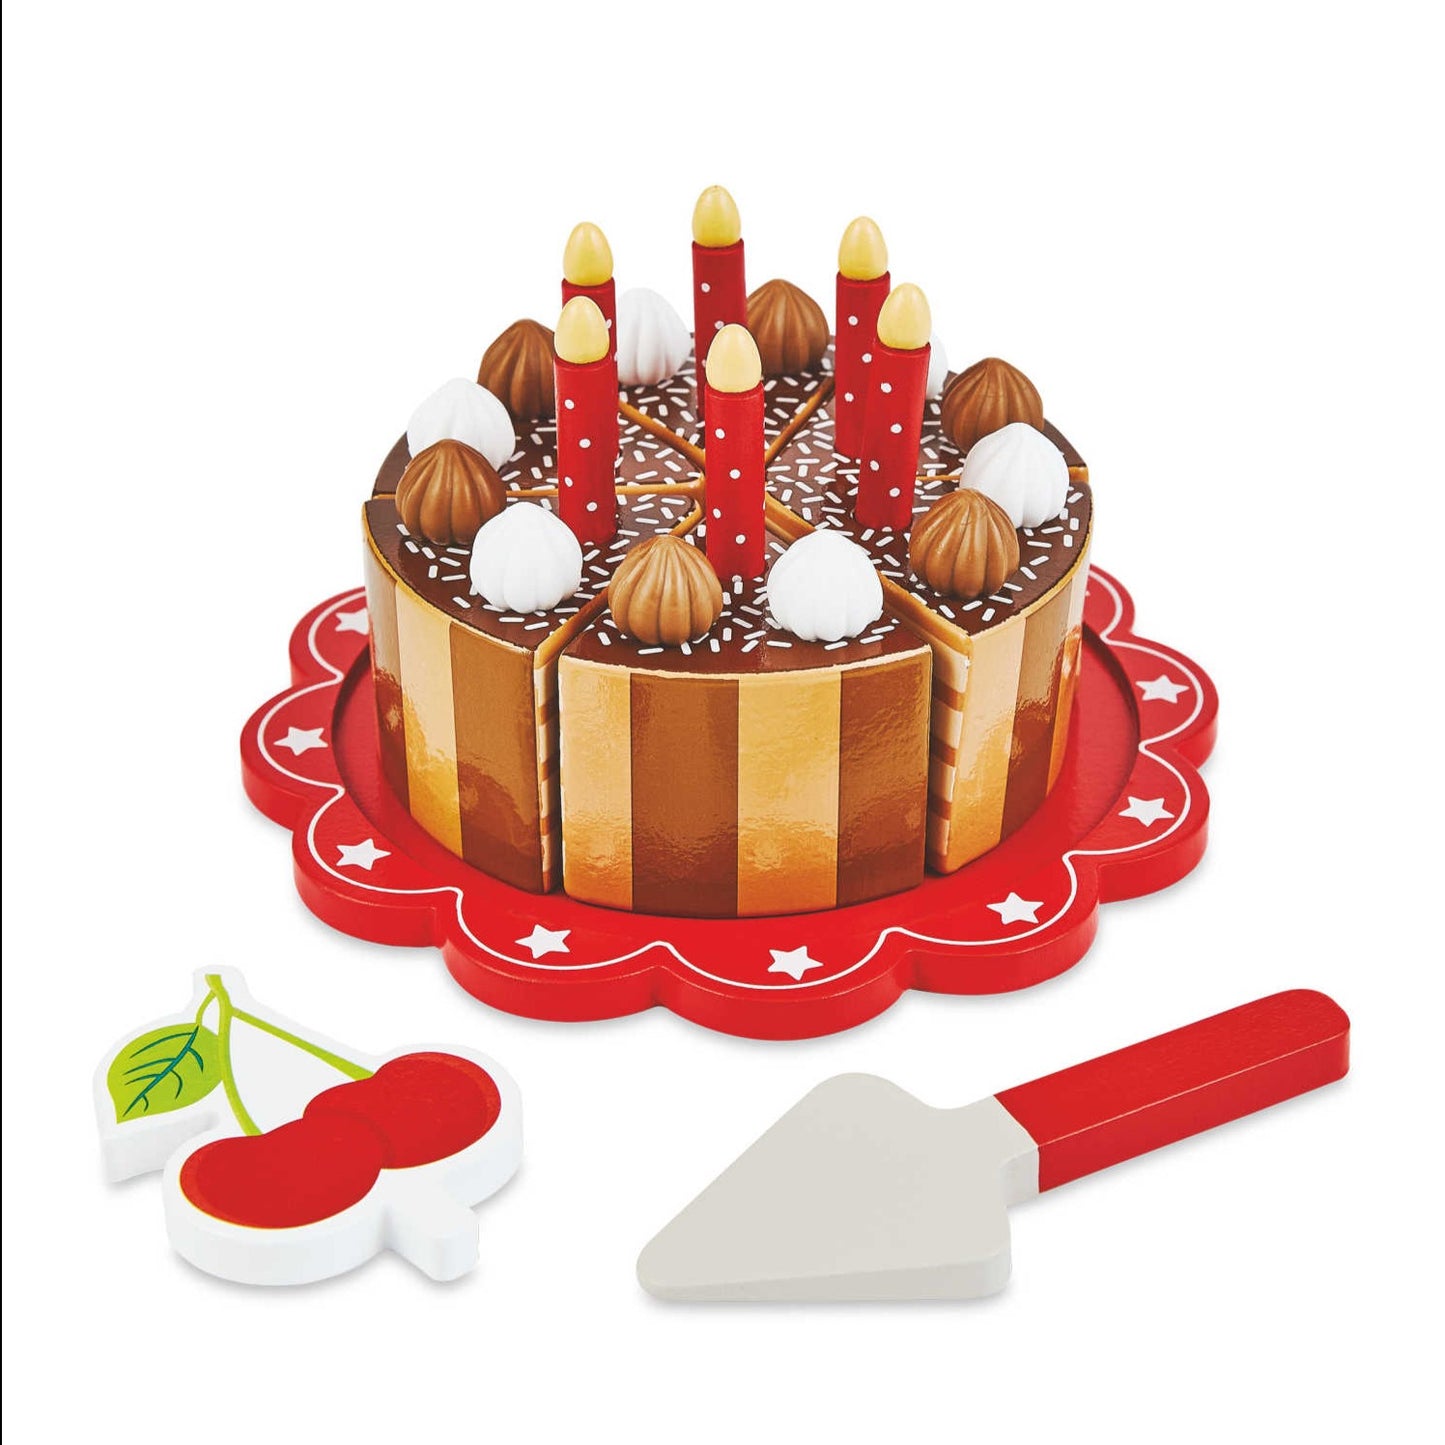 Wooden Chocolate Birthday Cake for Kids